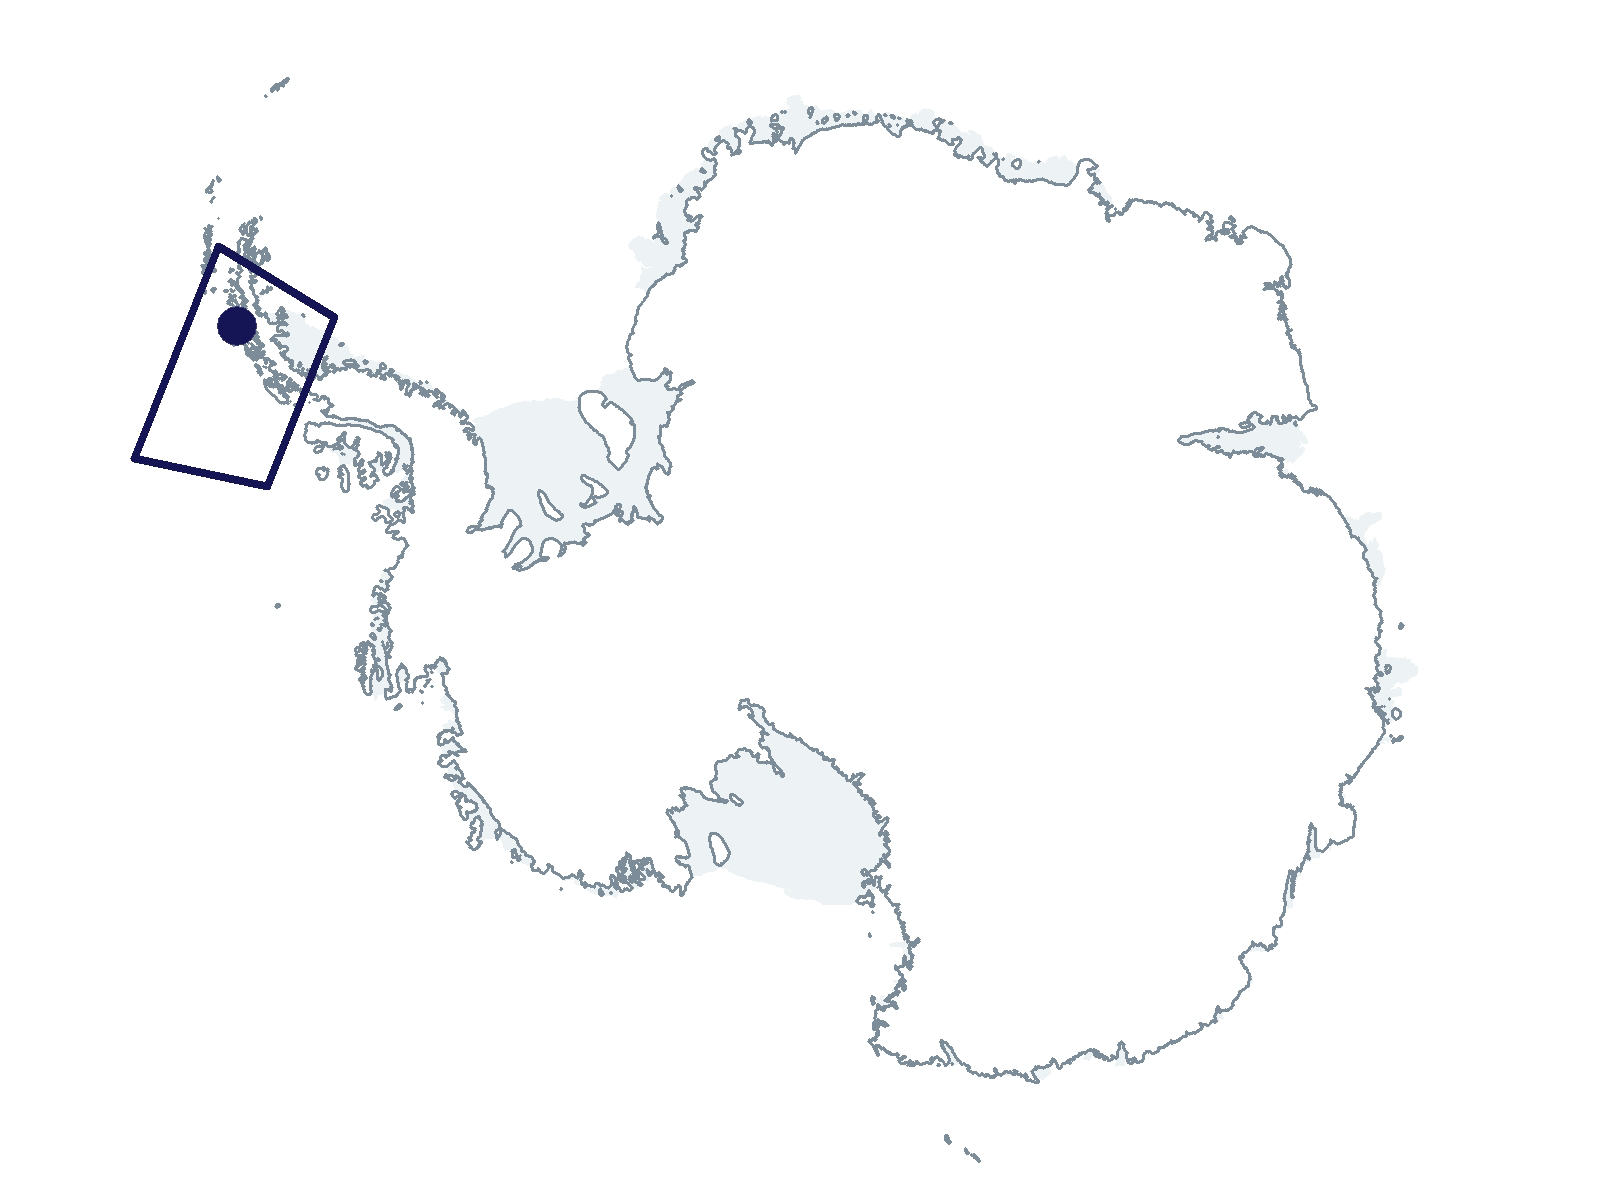 B-046-L/P Research Location(s): Western Antarctic Peninsula